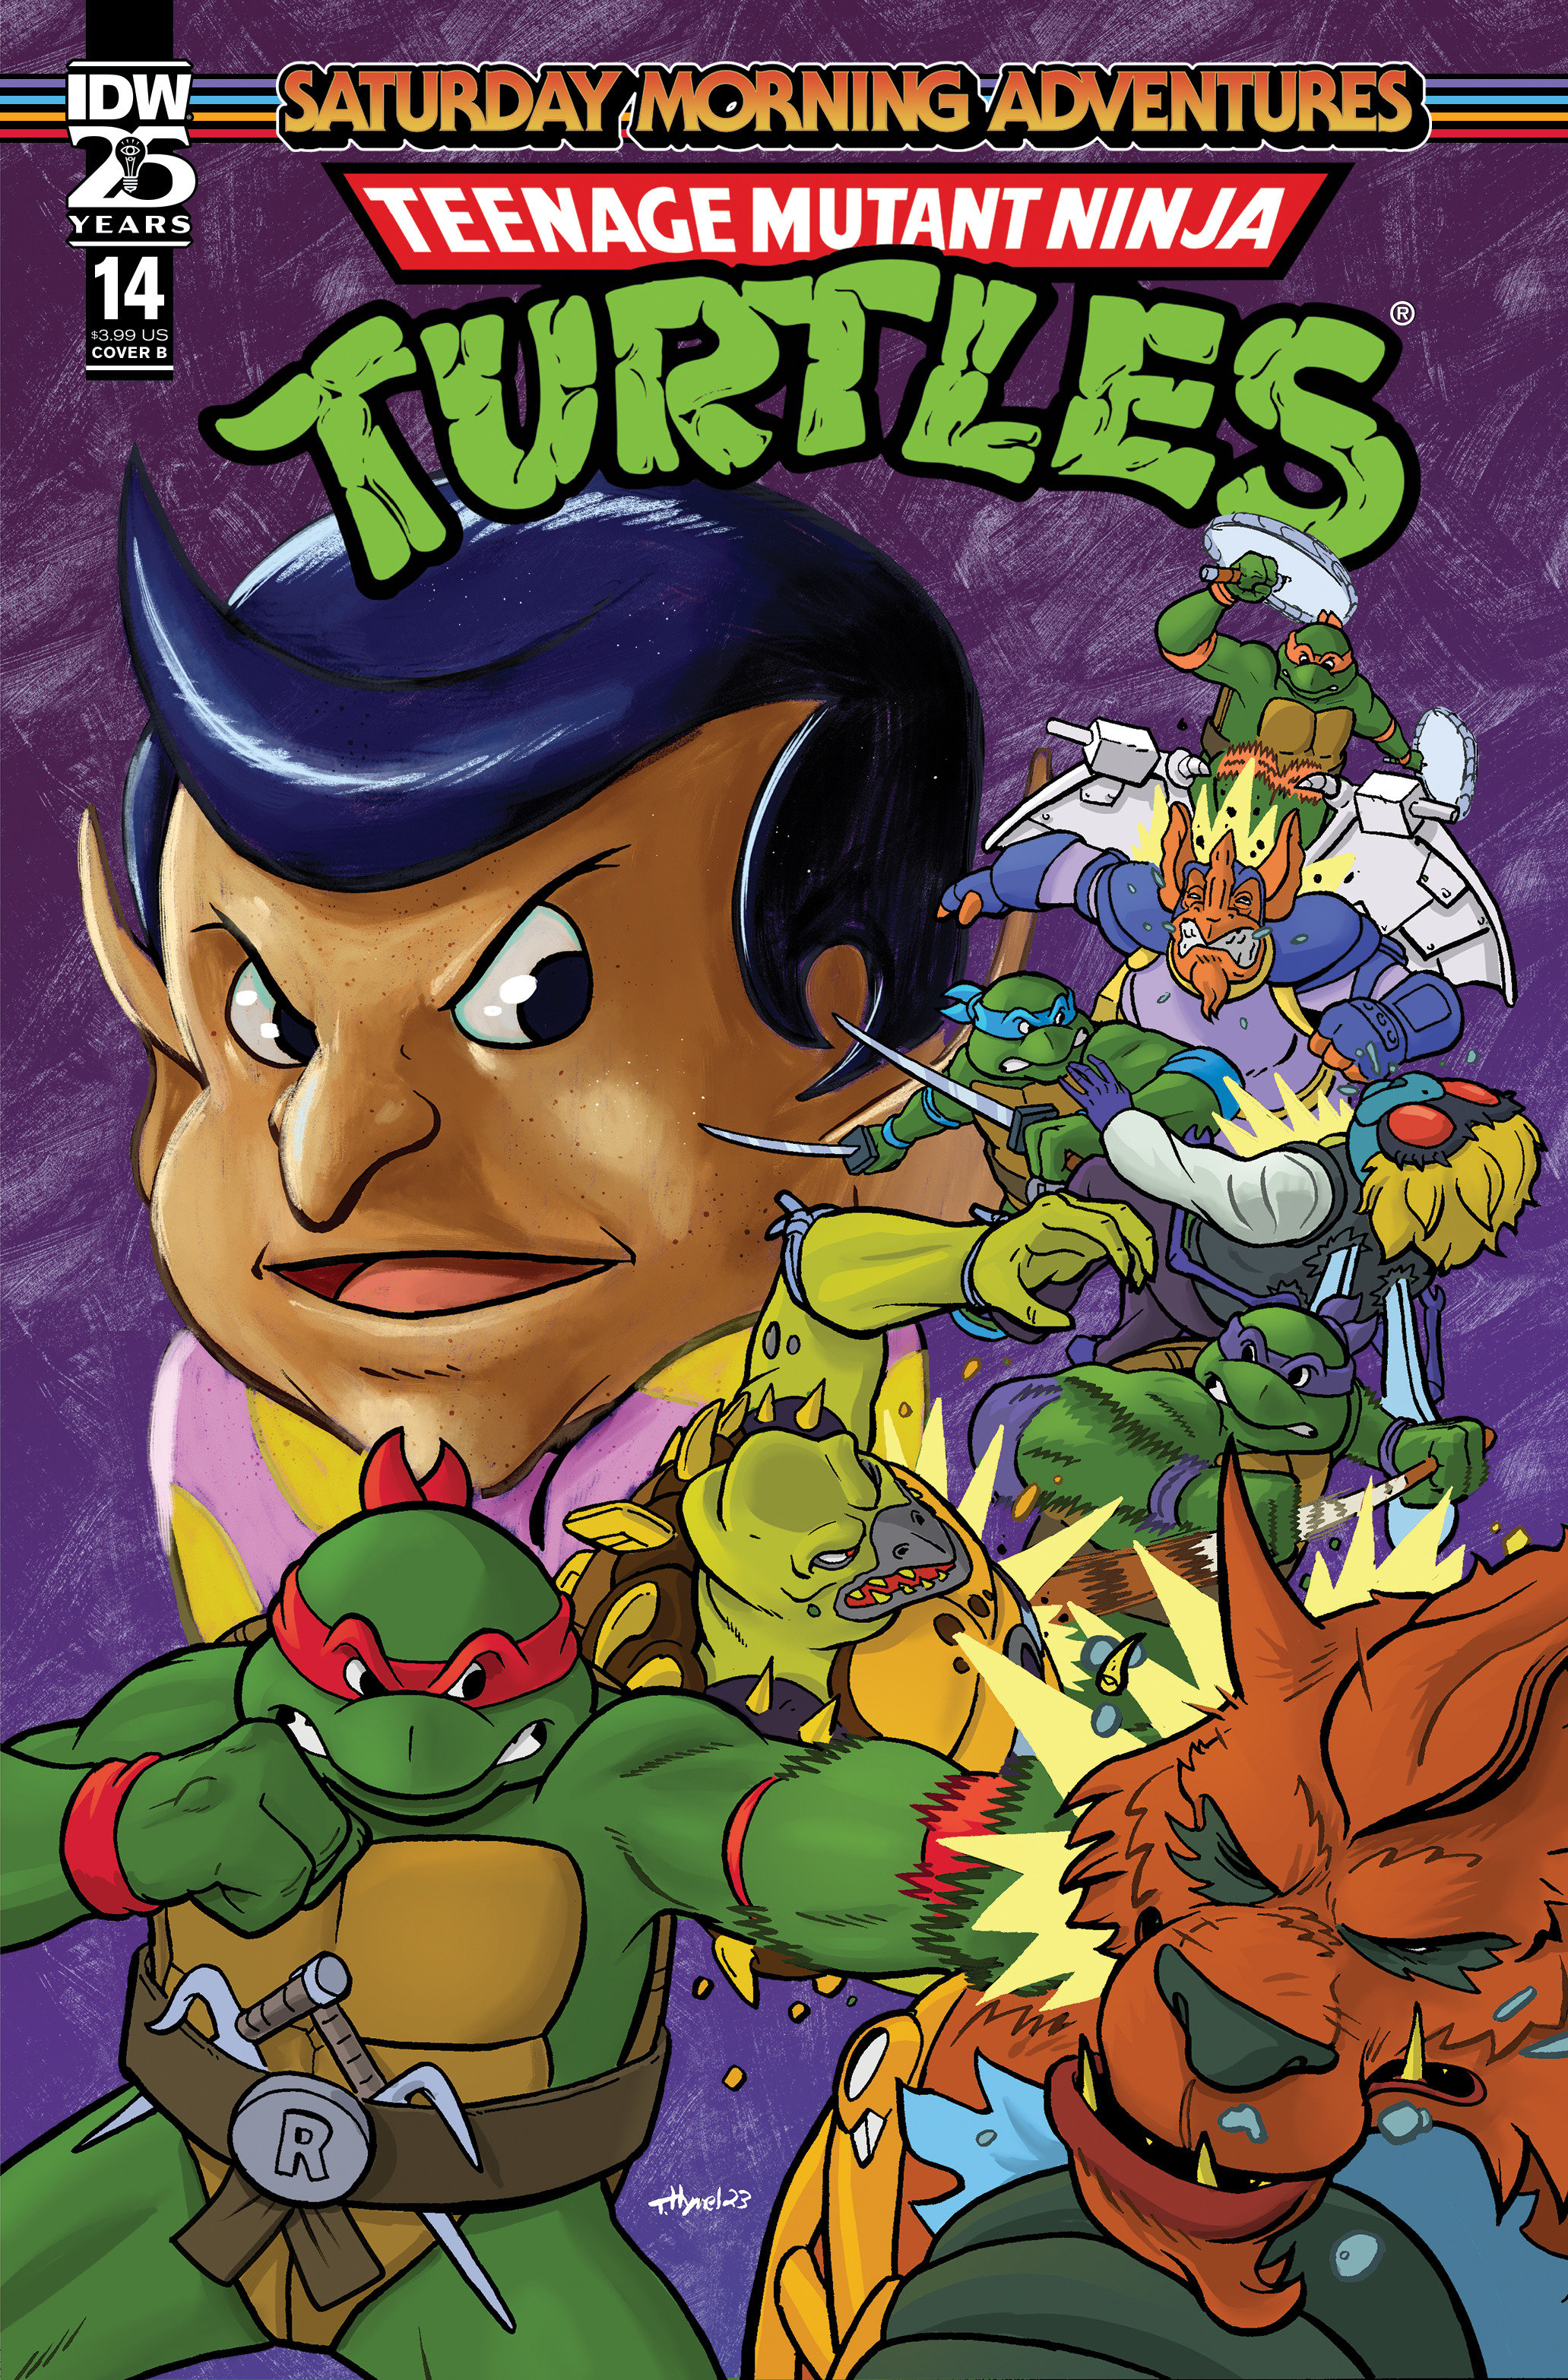 Teenage Mutant Ninja Turtles Saturday Morning Adventures Continued! #14 Cover B Hymel